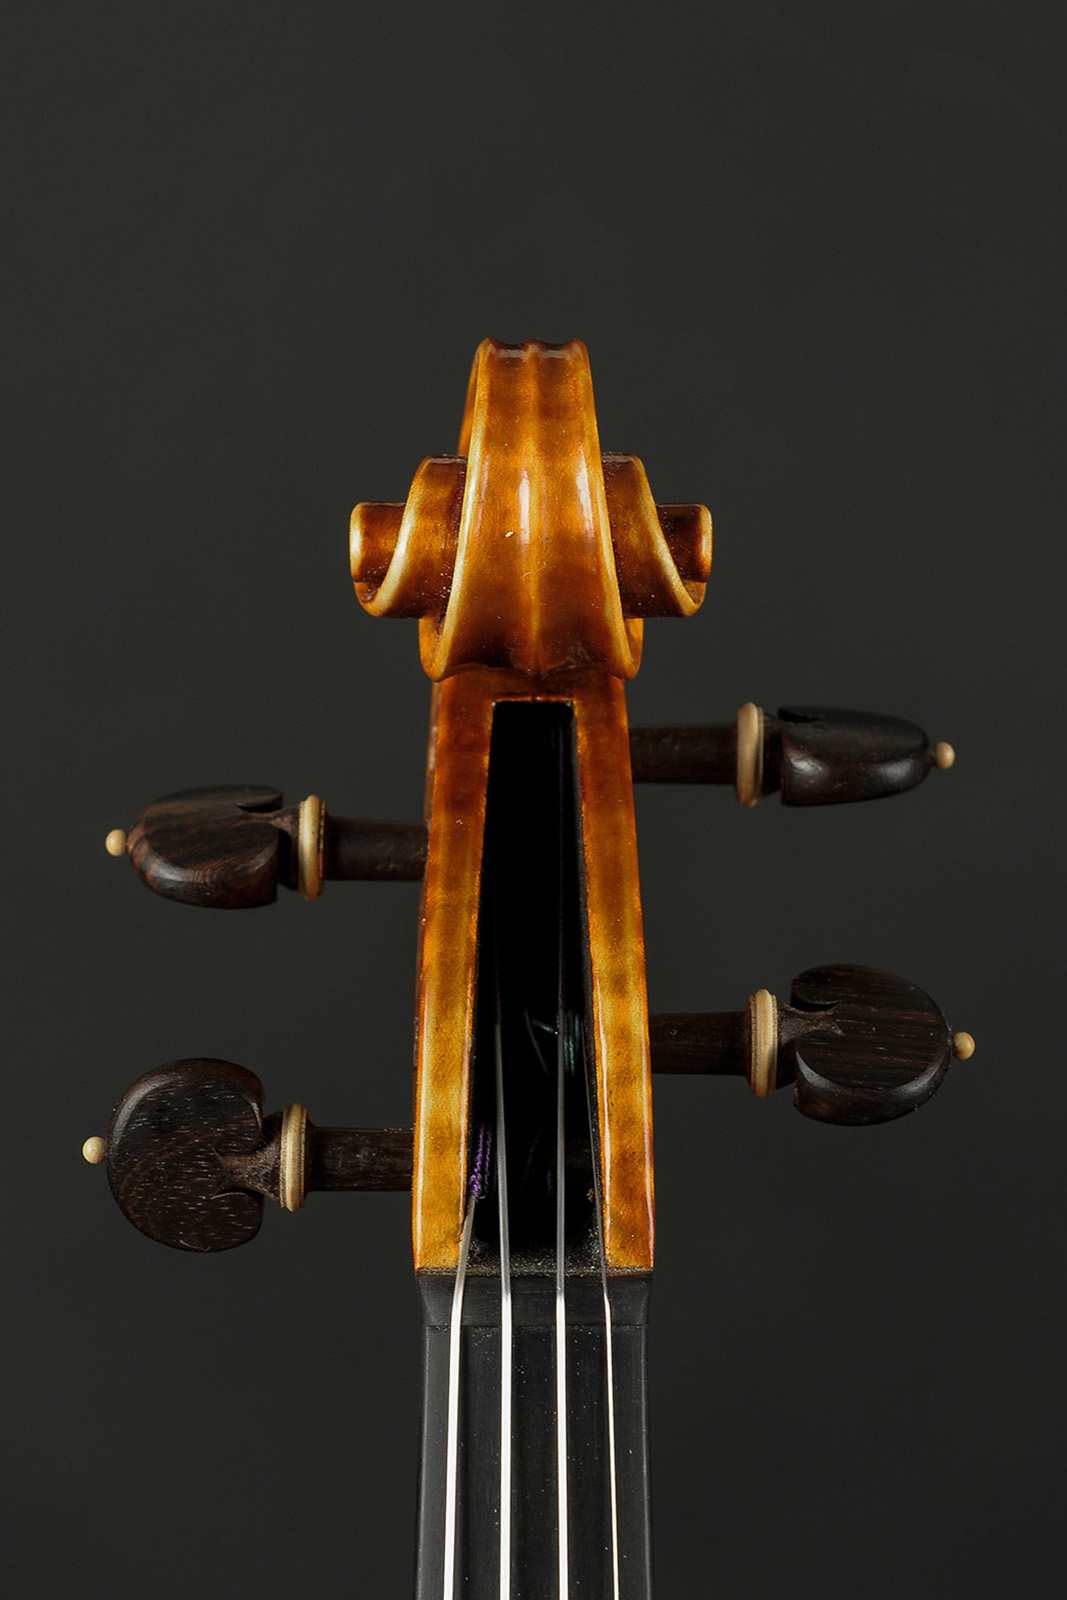 Antonio Stradivari Cremona c.1690 “Amatisee“ - Image 6